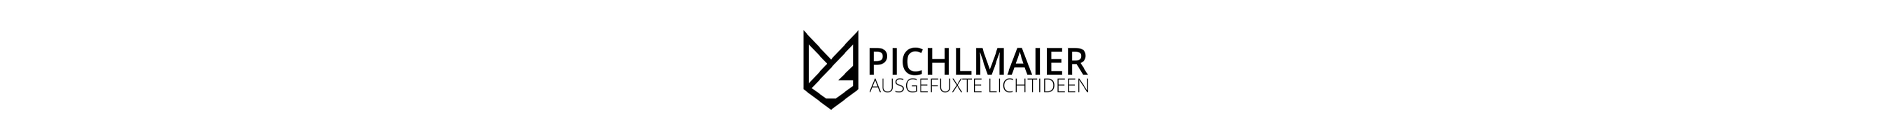 Pichlmaier